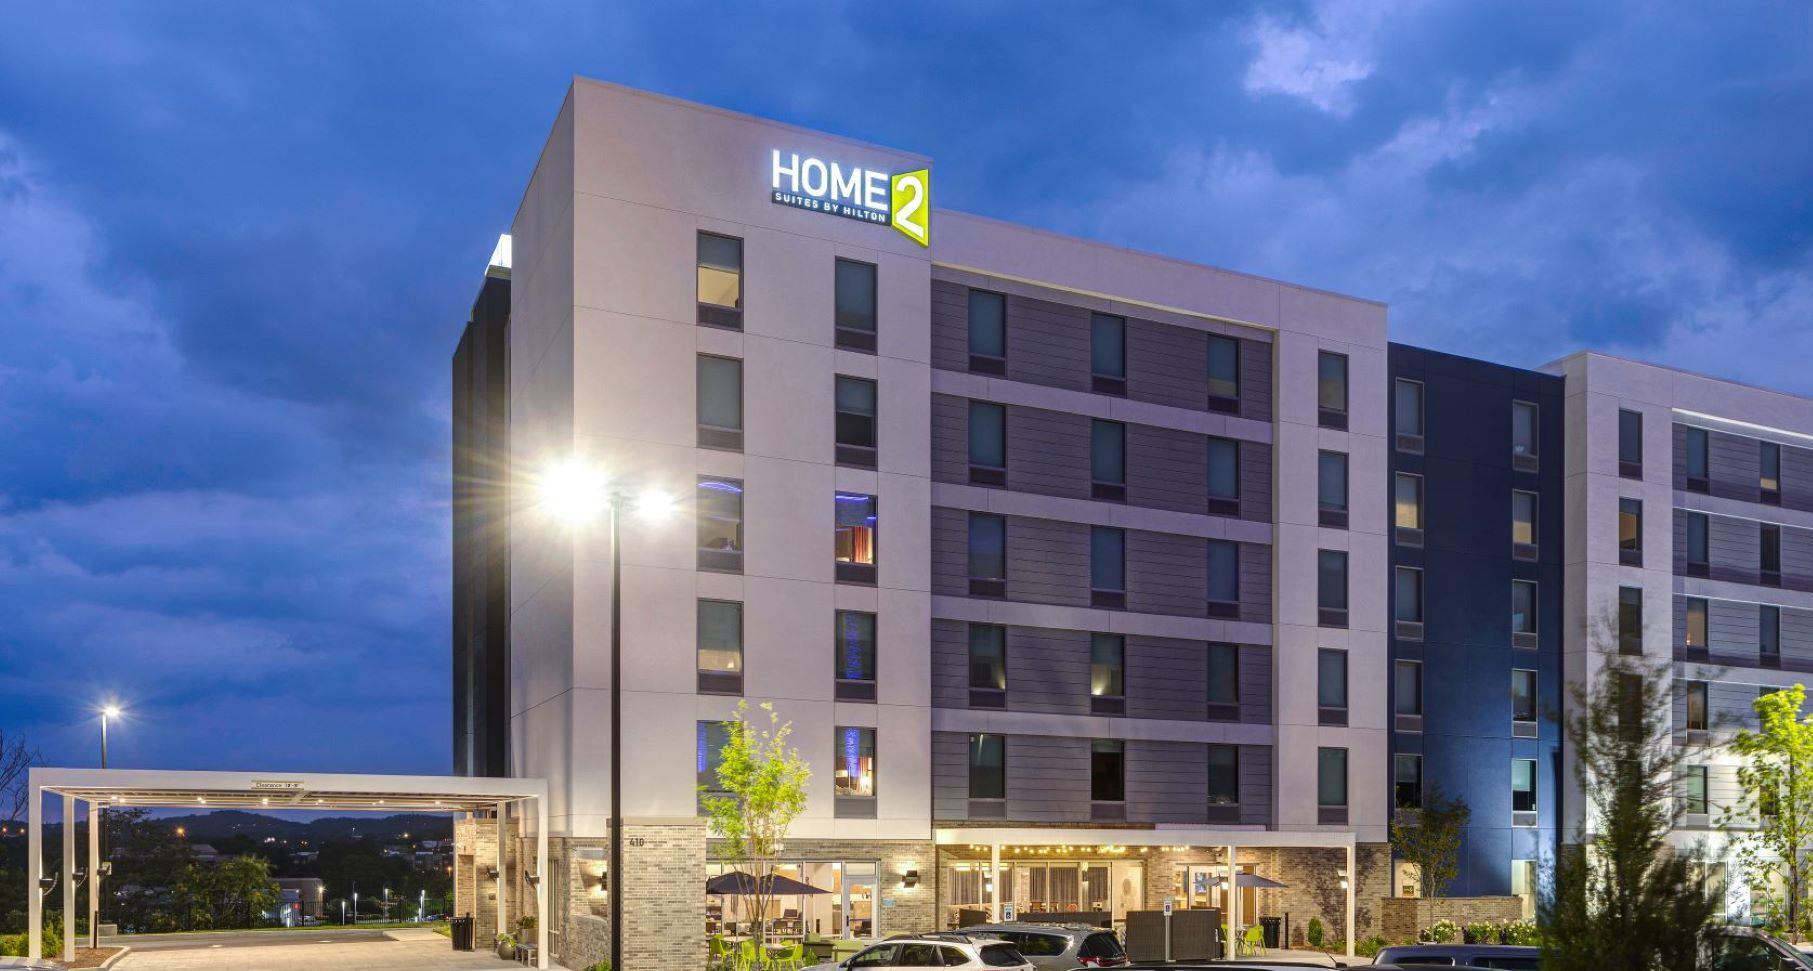 Home2 Suites by Hilton Nashville MetroCenter in Nashville, TN